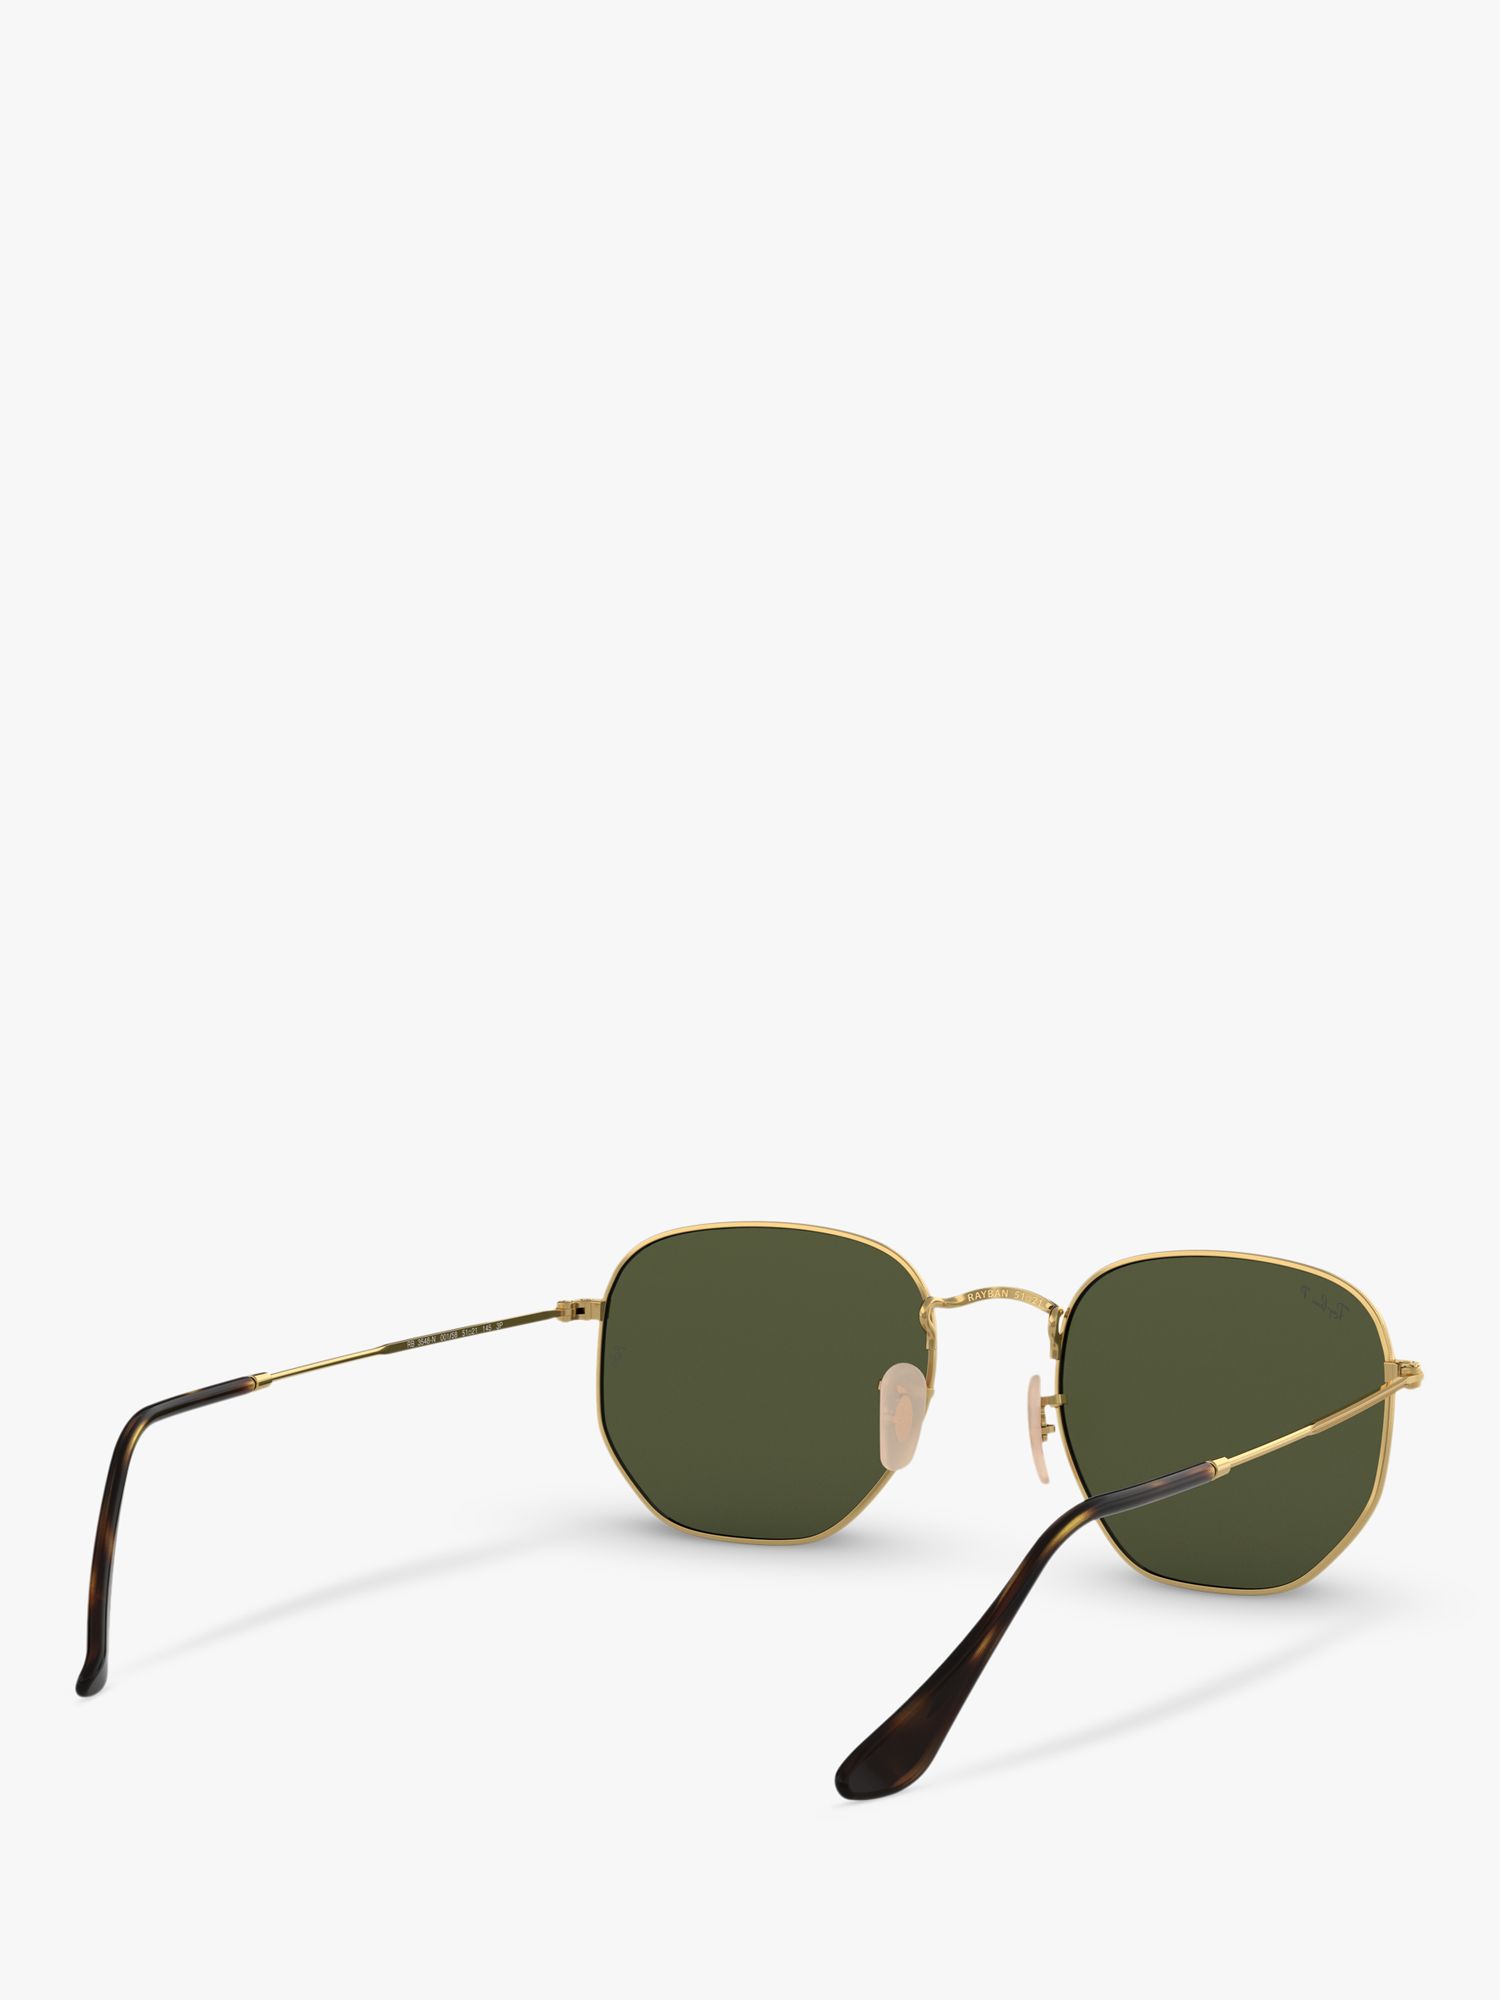 Ray-Ban RB3548N Unisex Polarised Hexagonal Sunglasses, Gold/Green